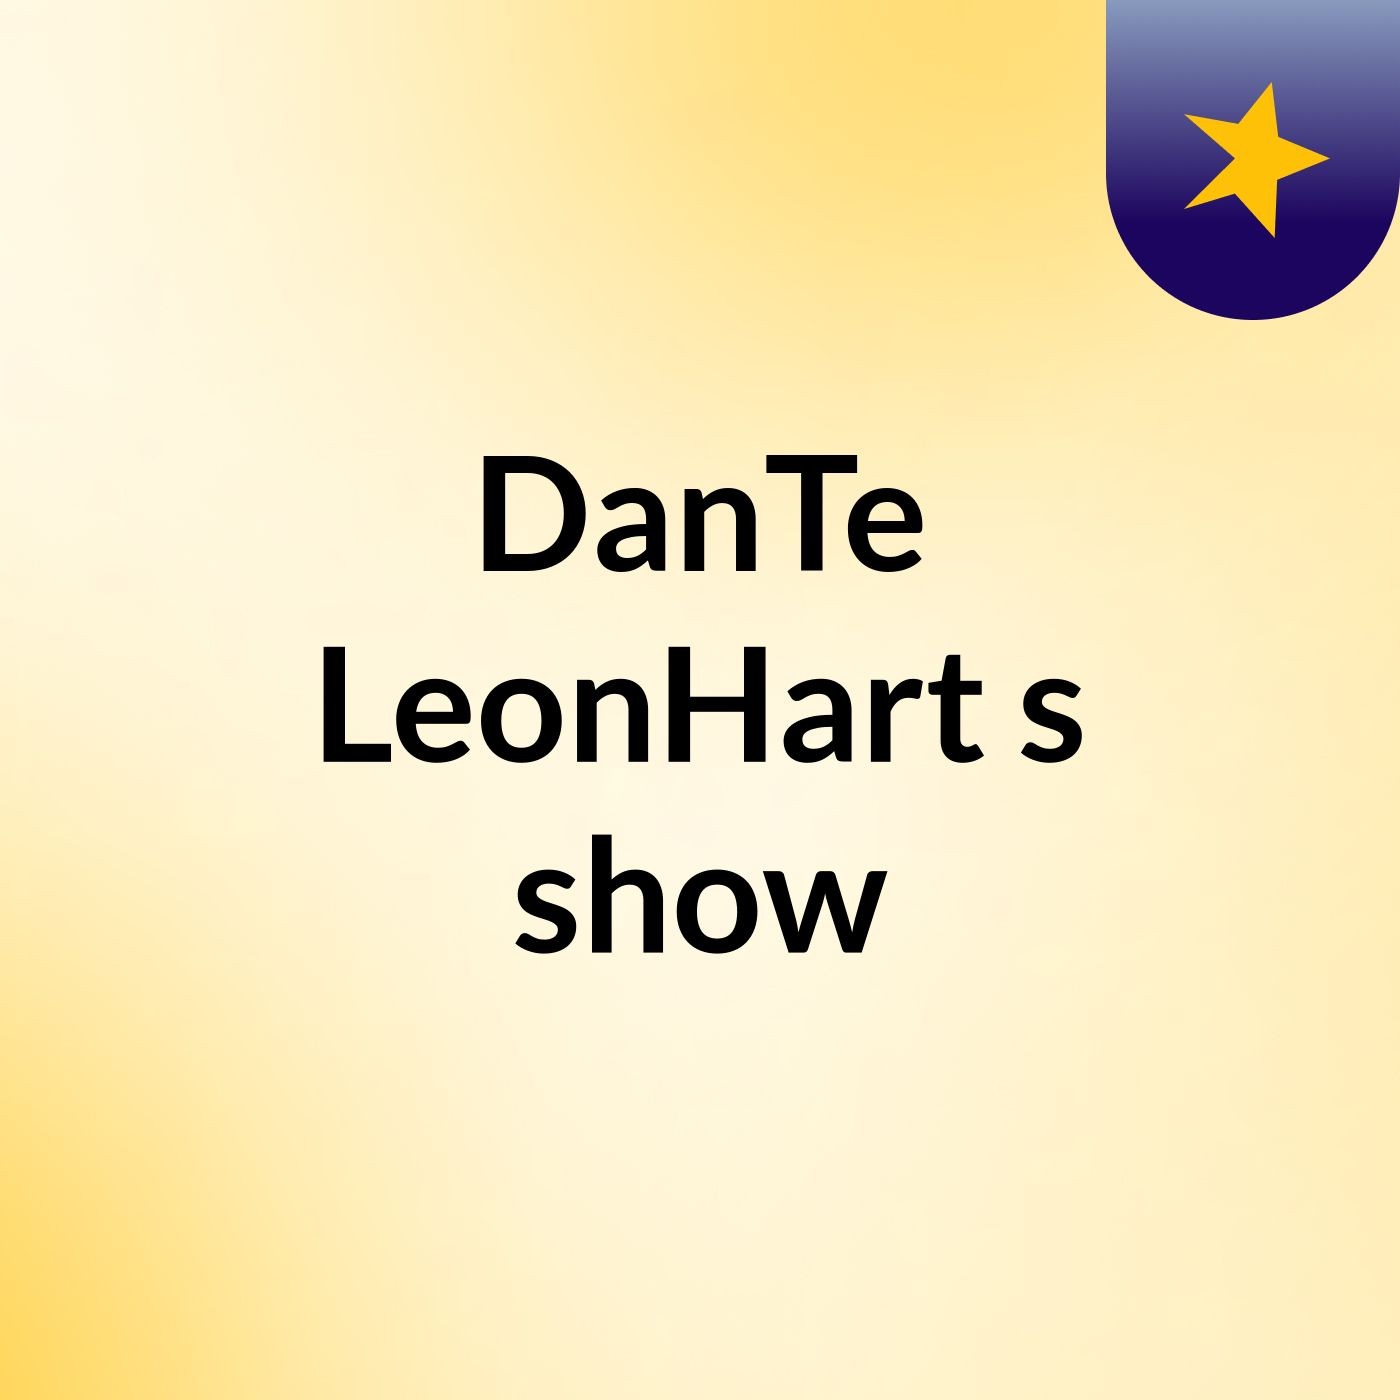 DanTe LeonHart's show